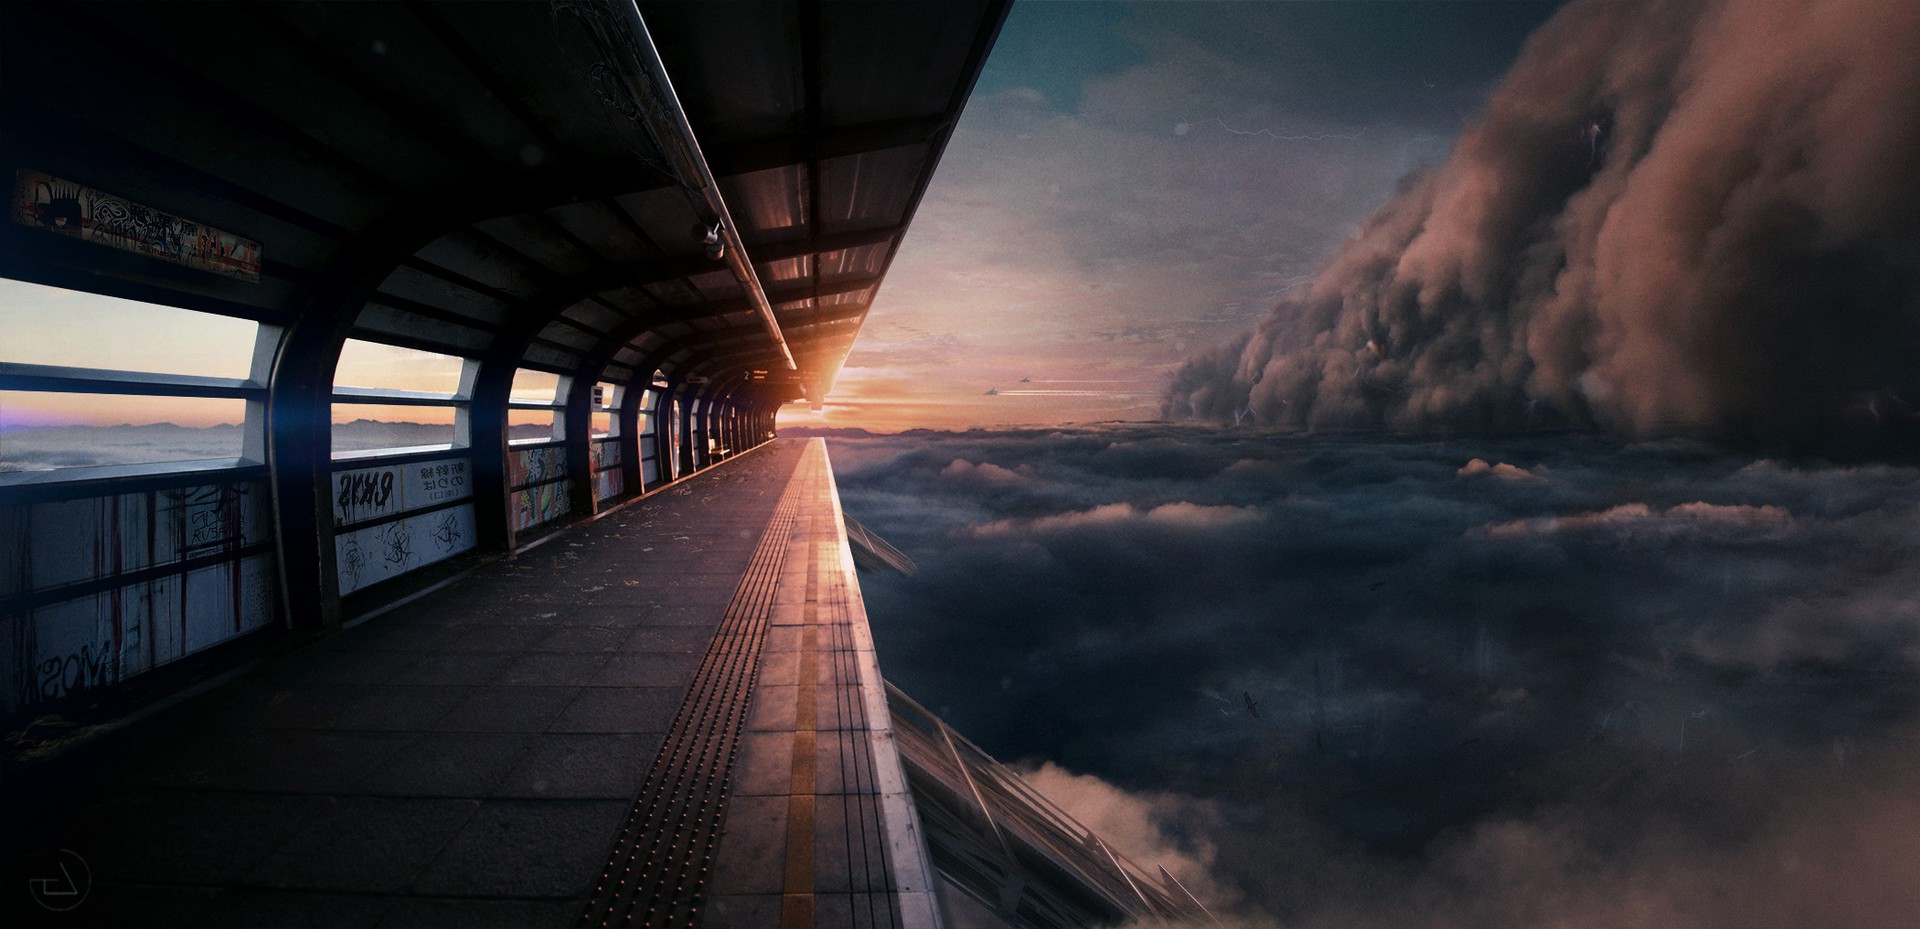 Skyline Futuristic Clouds Train Station Star Wars